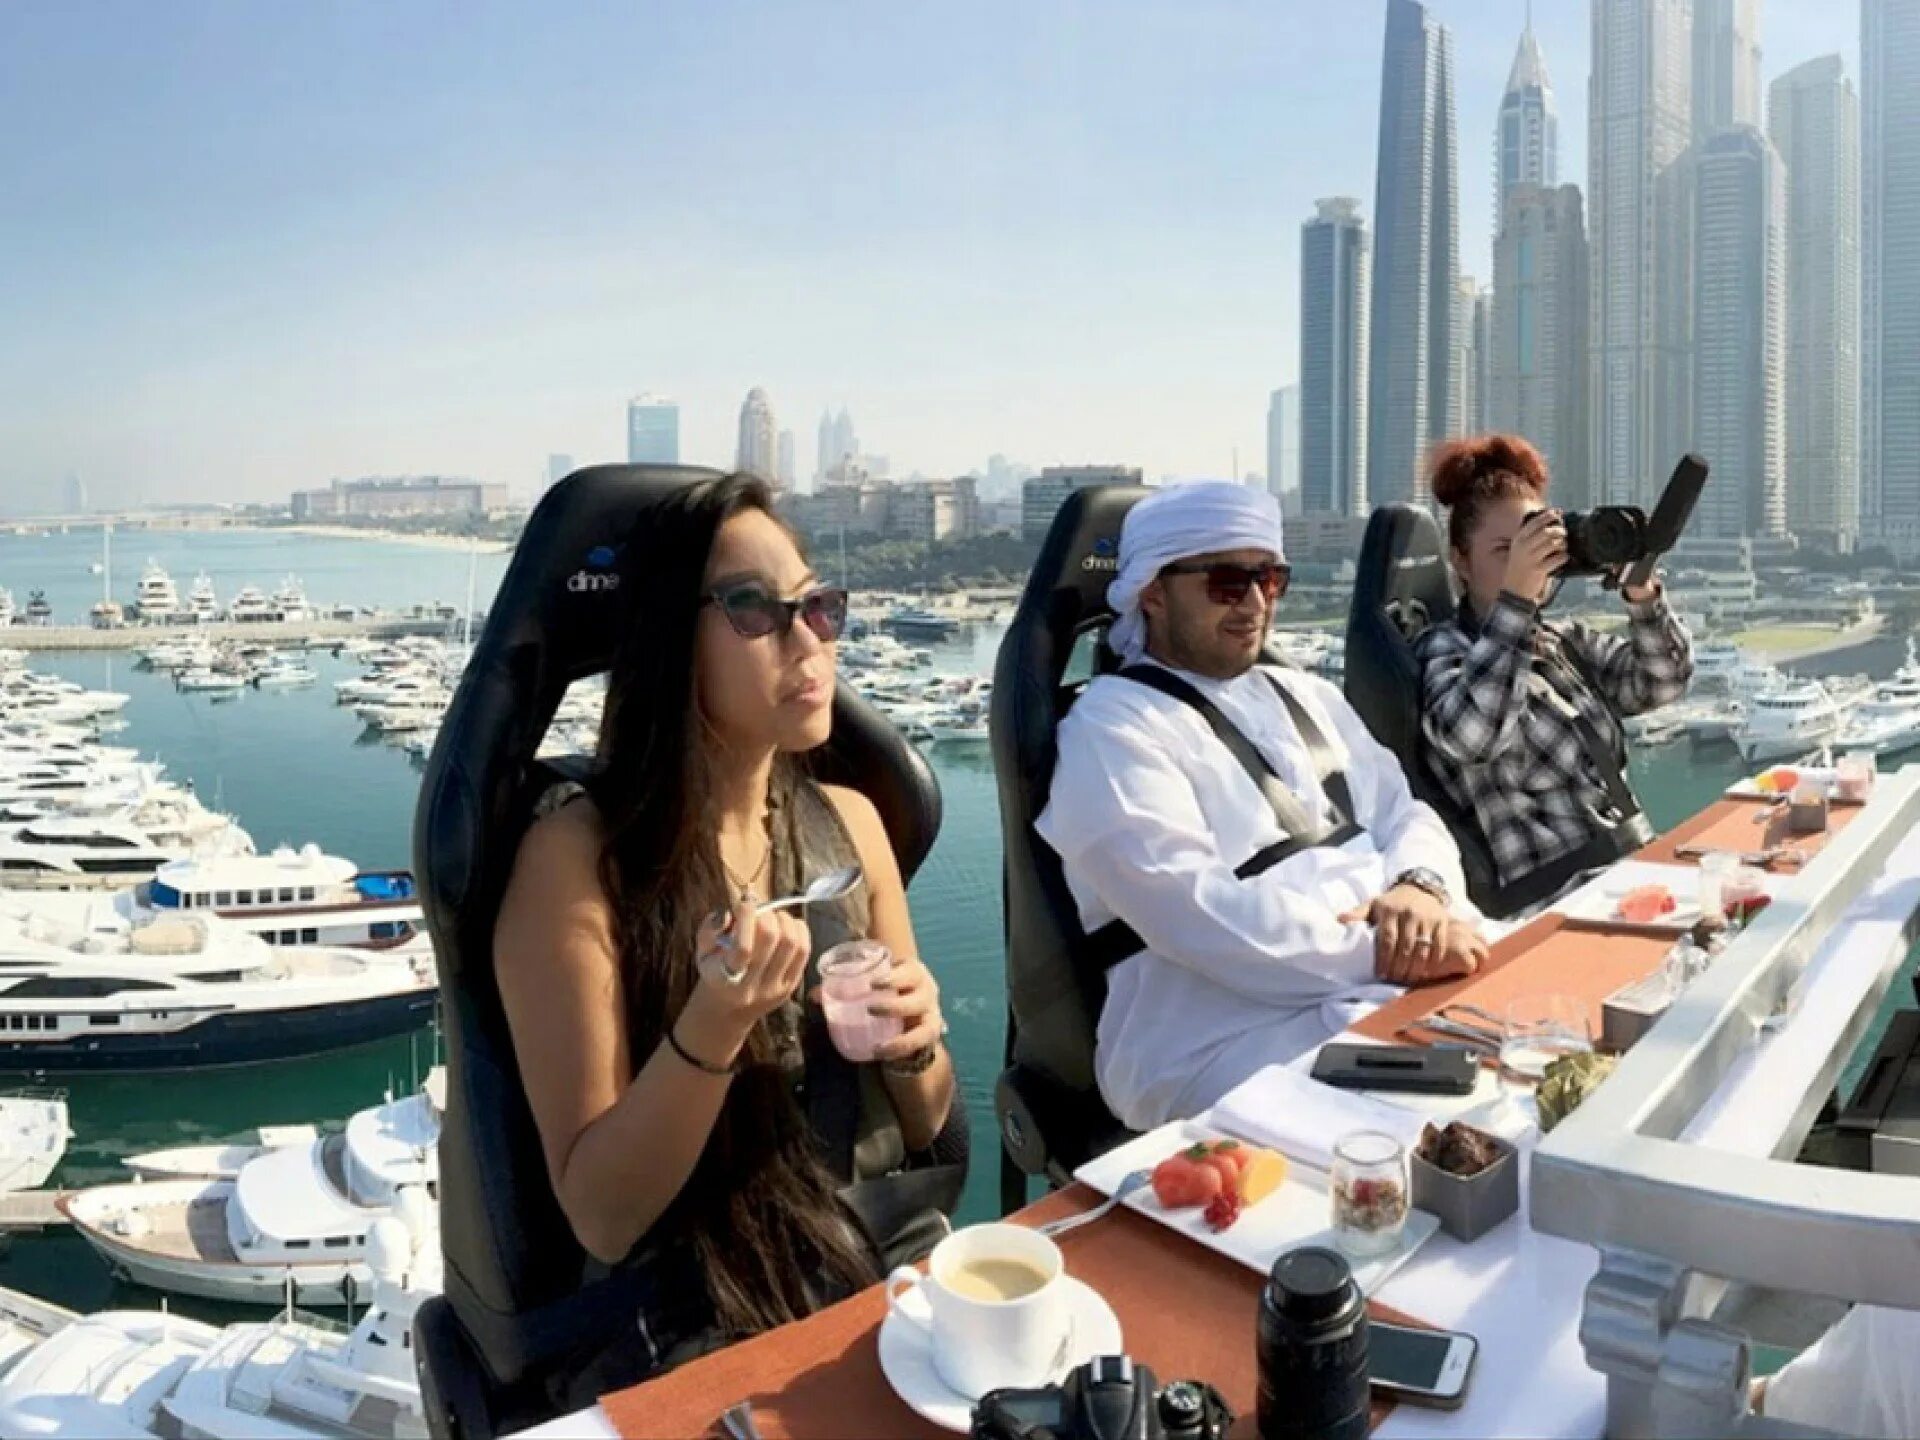 Dinner in the Sky Дубай. Dinner in the Sky ресторан Dubai. Дубай Скай Дубай. Ресторан Clap Дубай. Маша в дубае